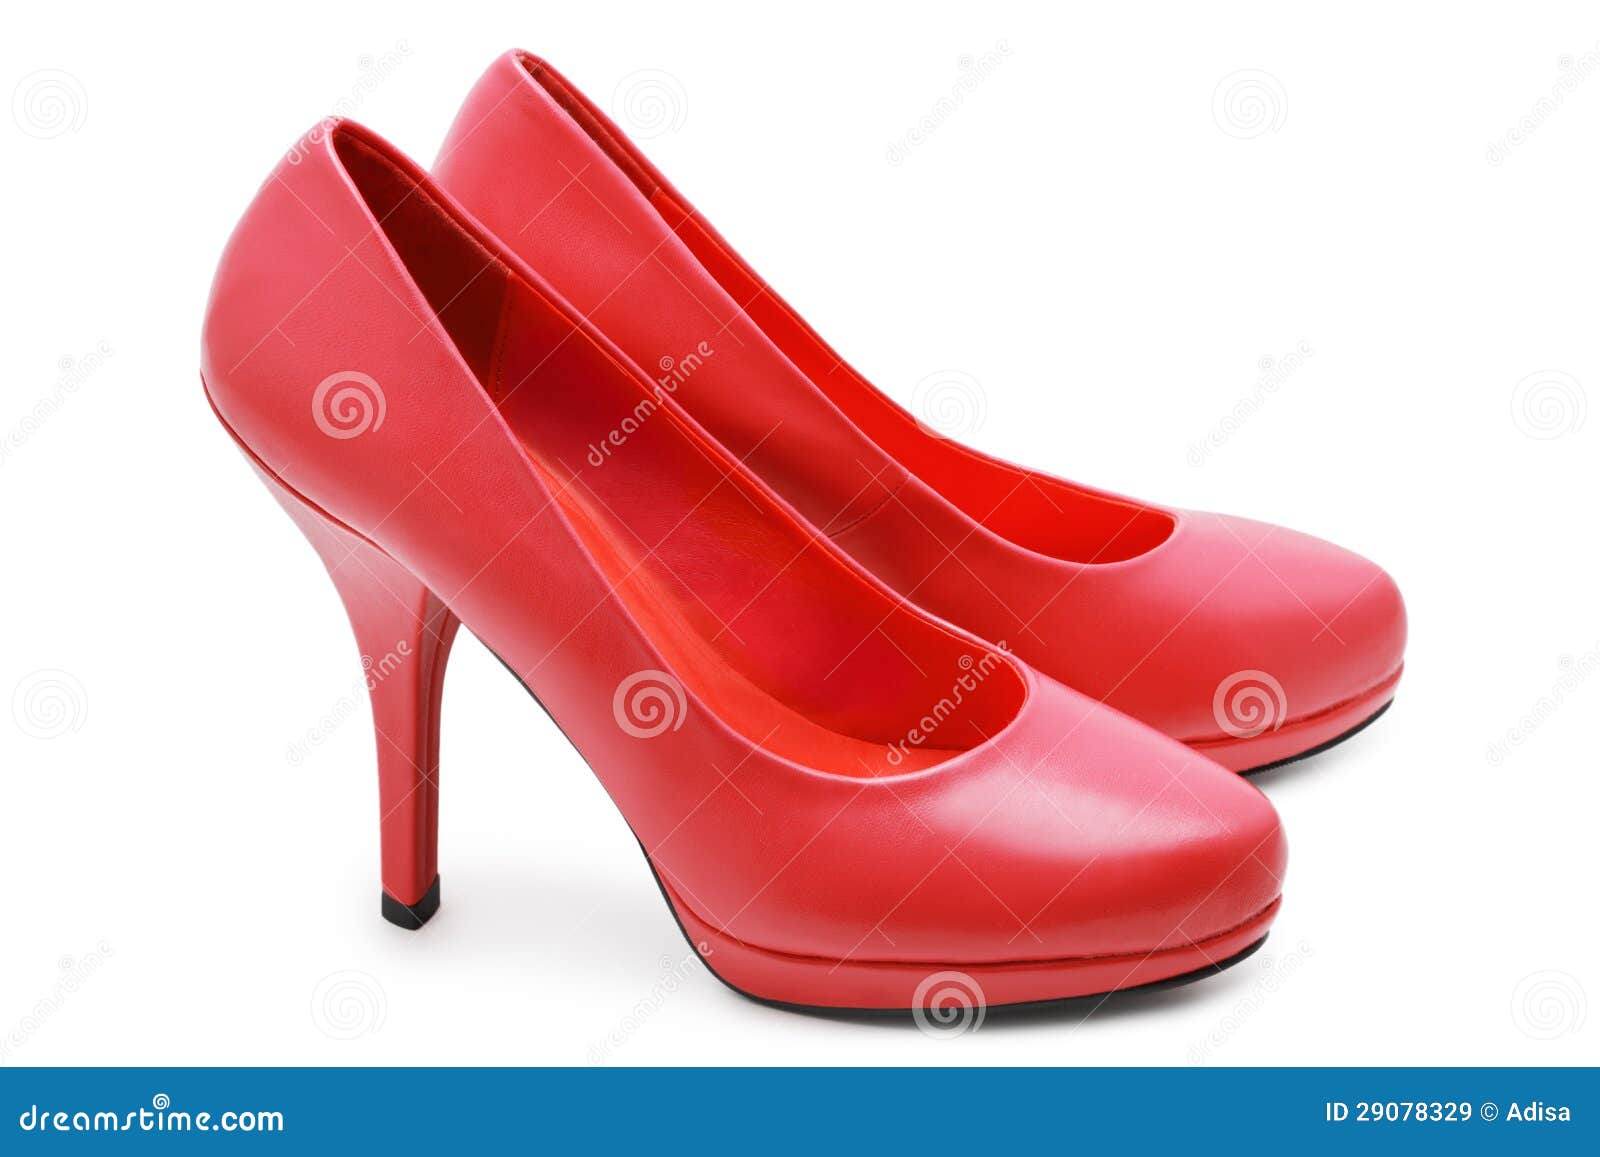 Red shoes stock image. Image of dress, close, elegant - 29078329